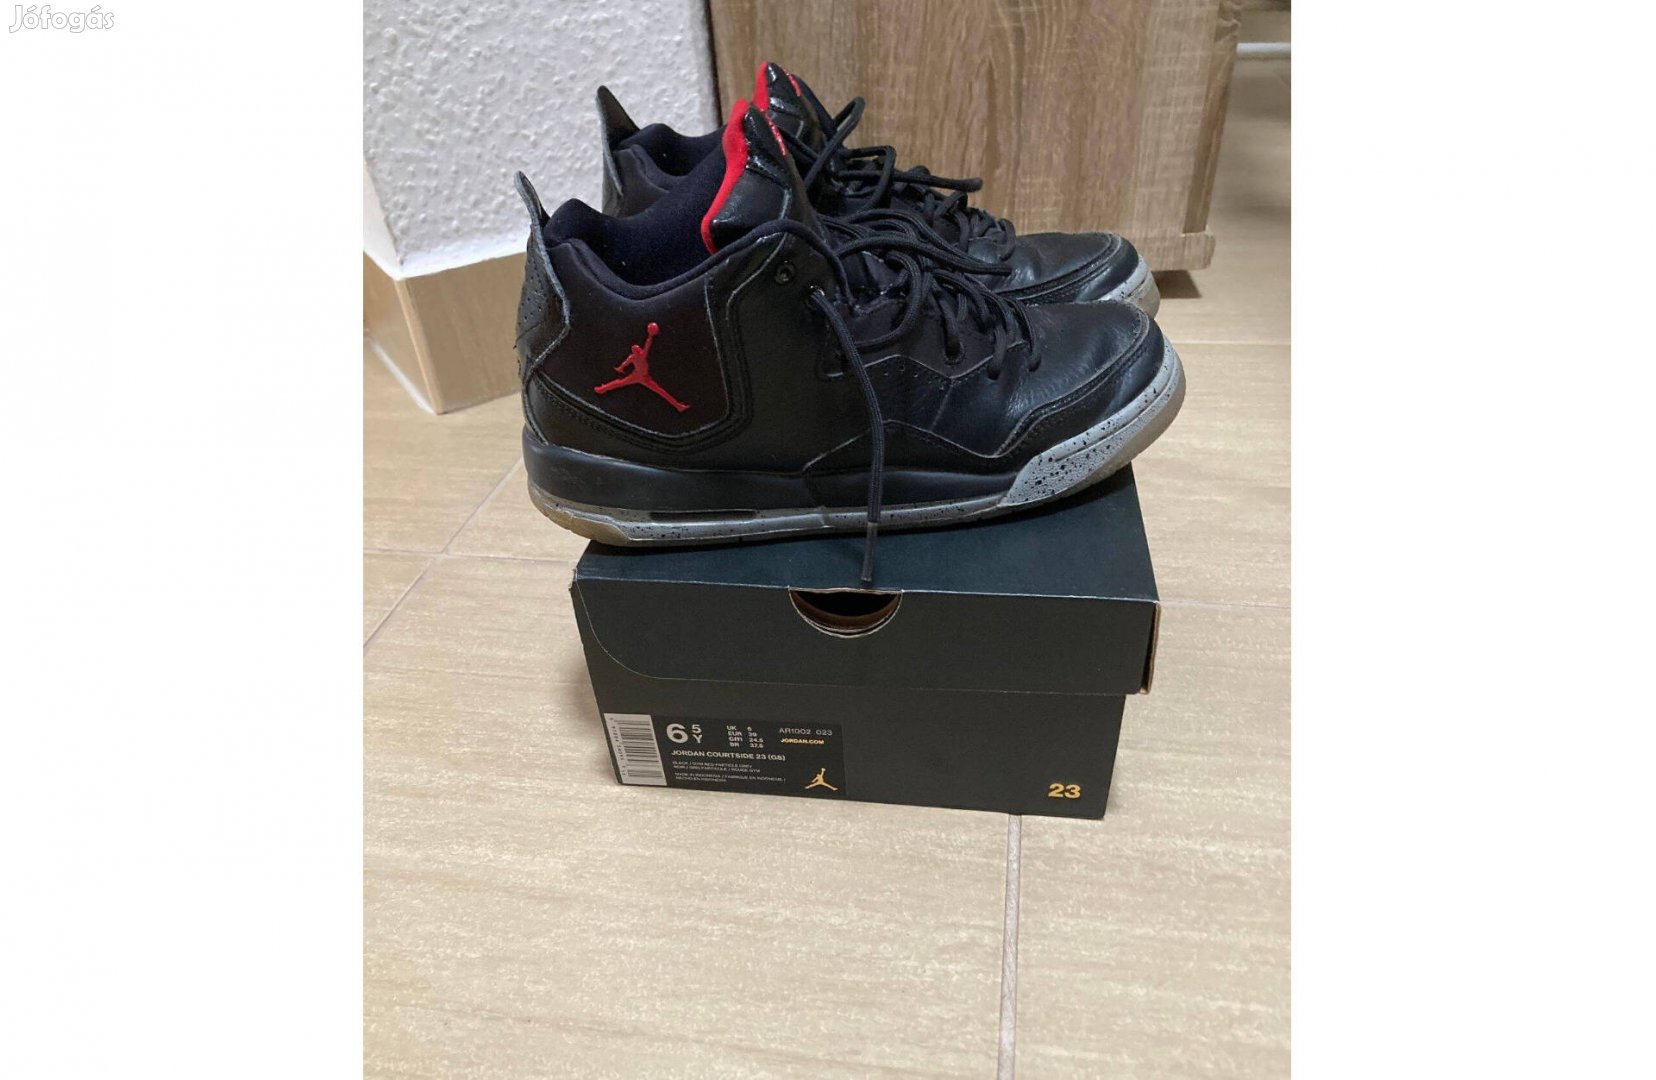 Nike Jordan courtside 23 cipő 39-es méret - 14 999 Ft + pkg